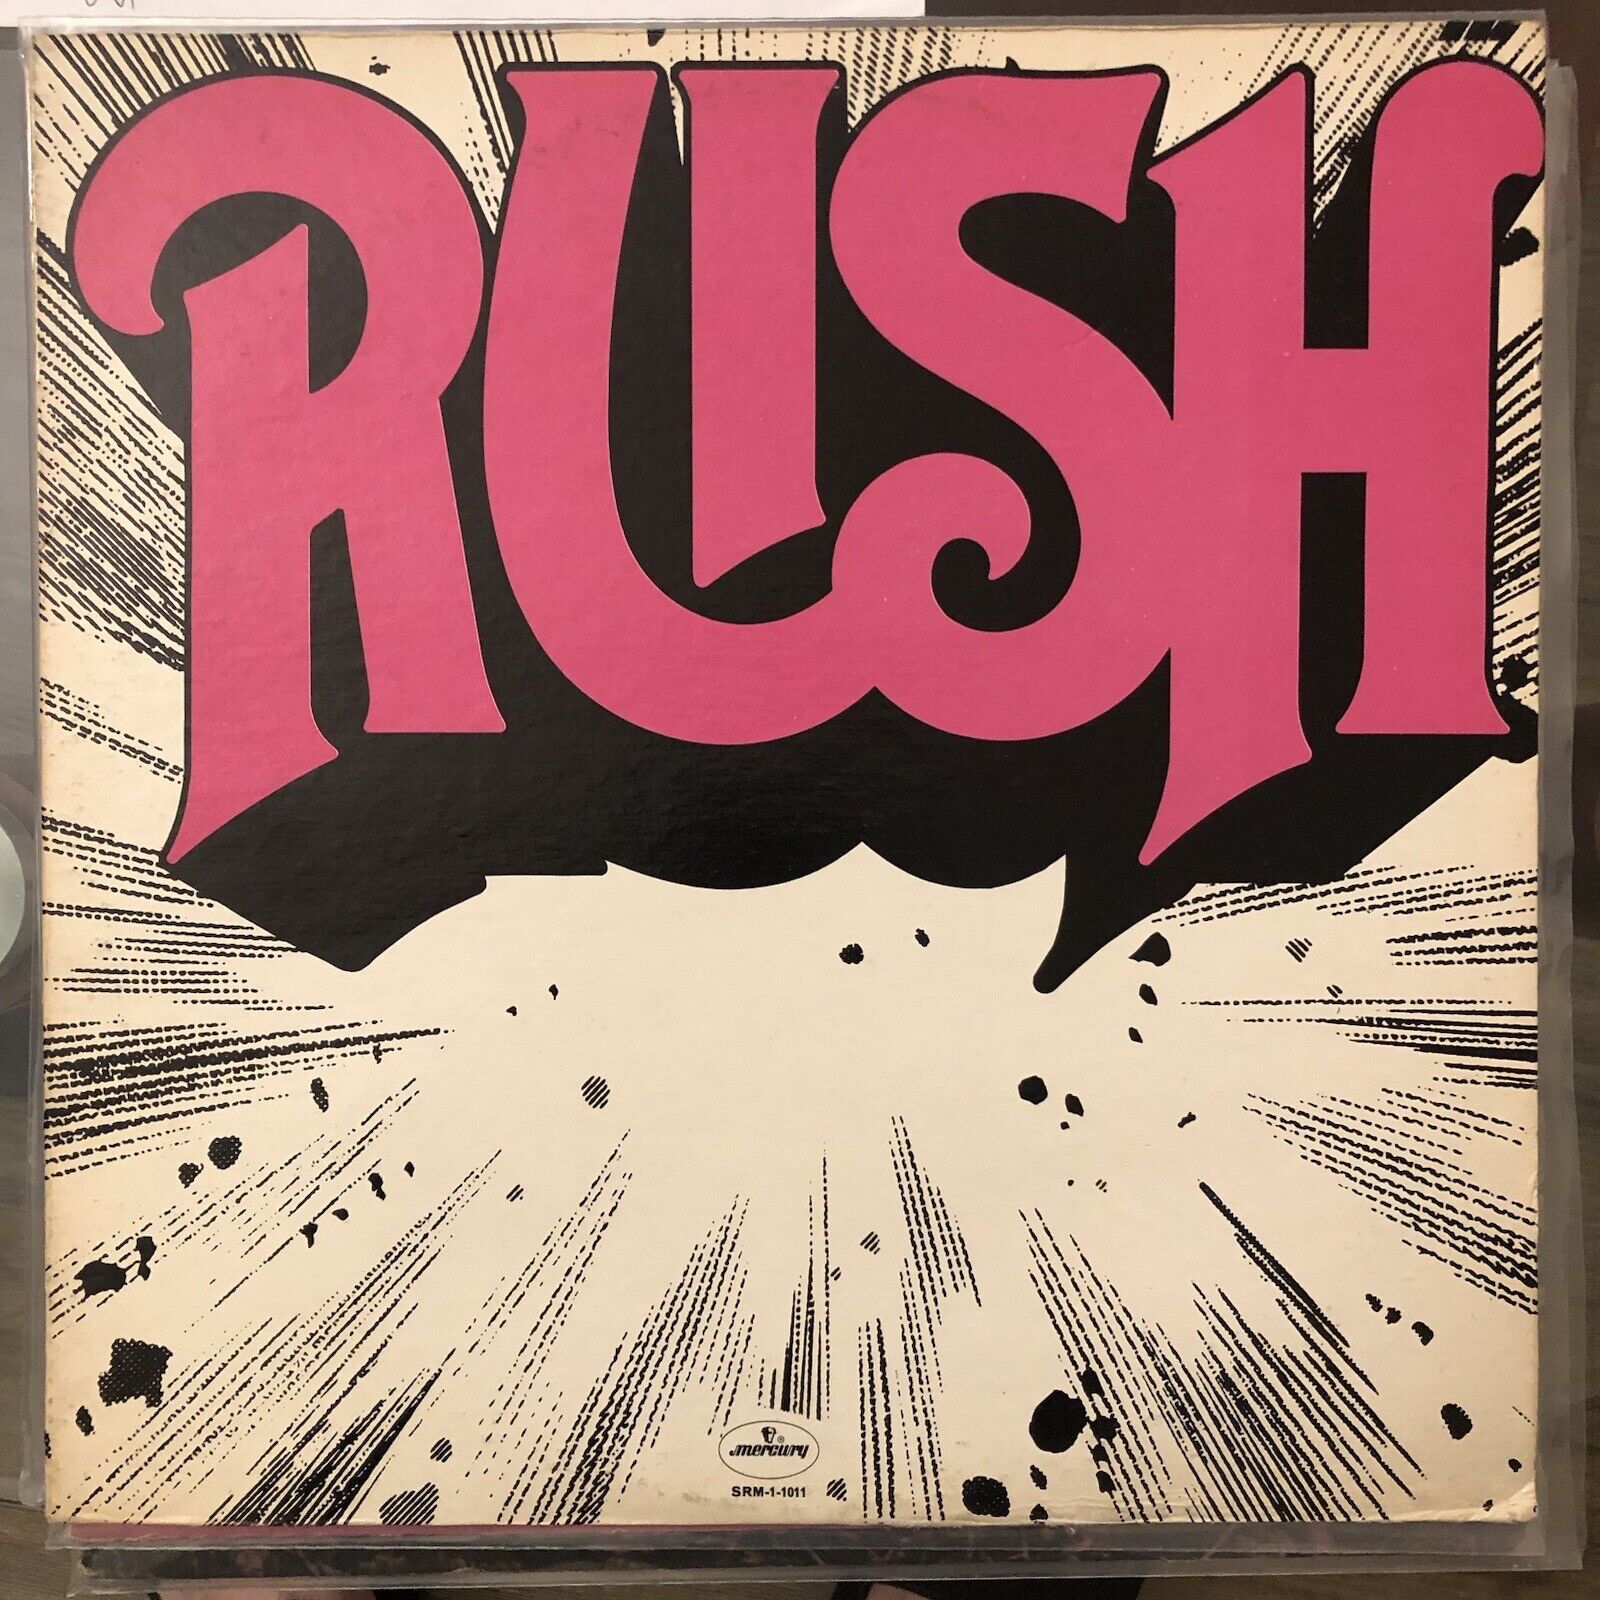 RUSH, 1974. US. SRM-1-1011